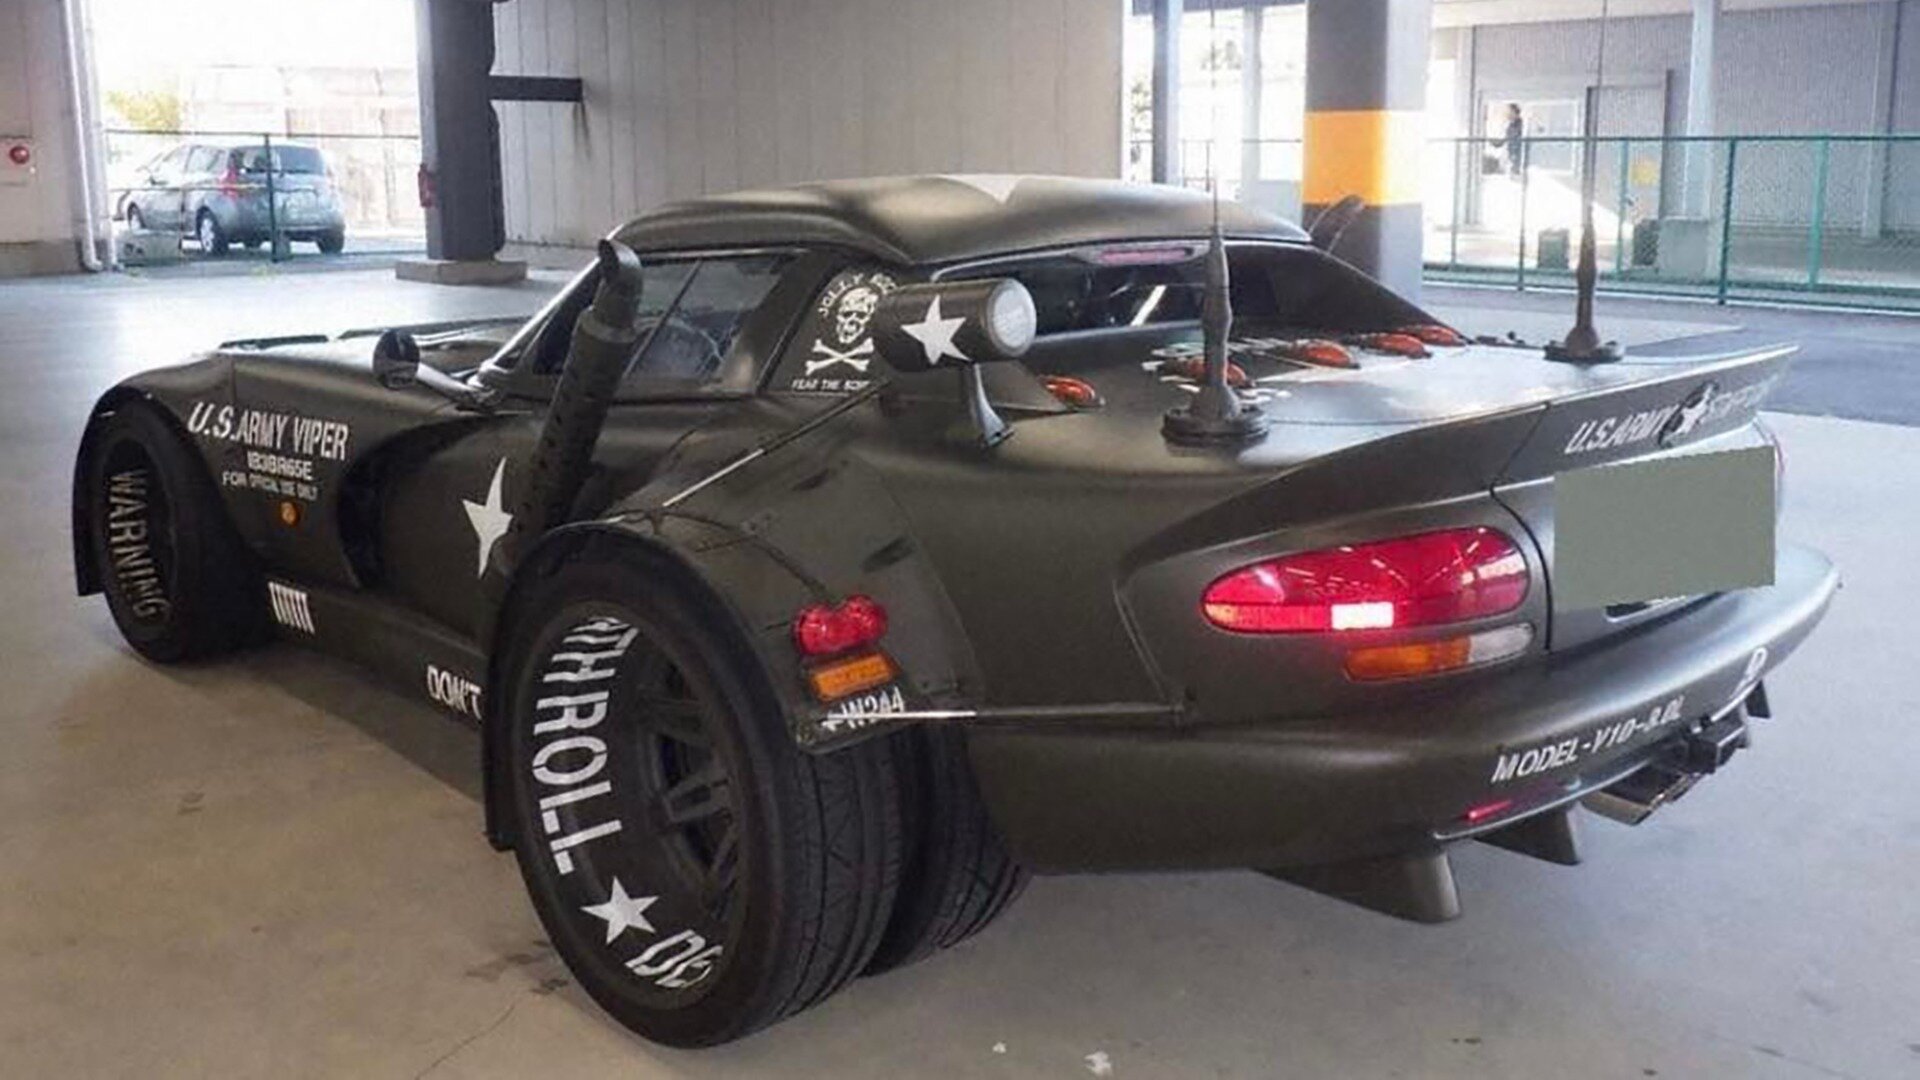 Владелец превратил Dodge Viper в «армейский» суперкар со сдвоенными шинами